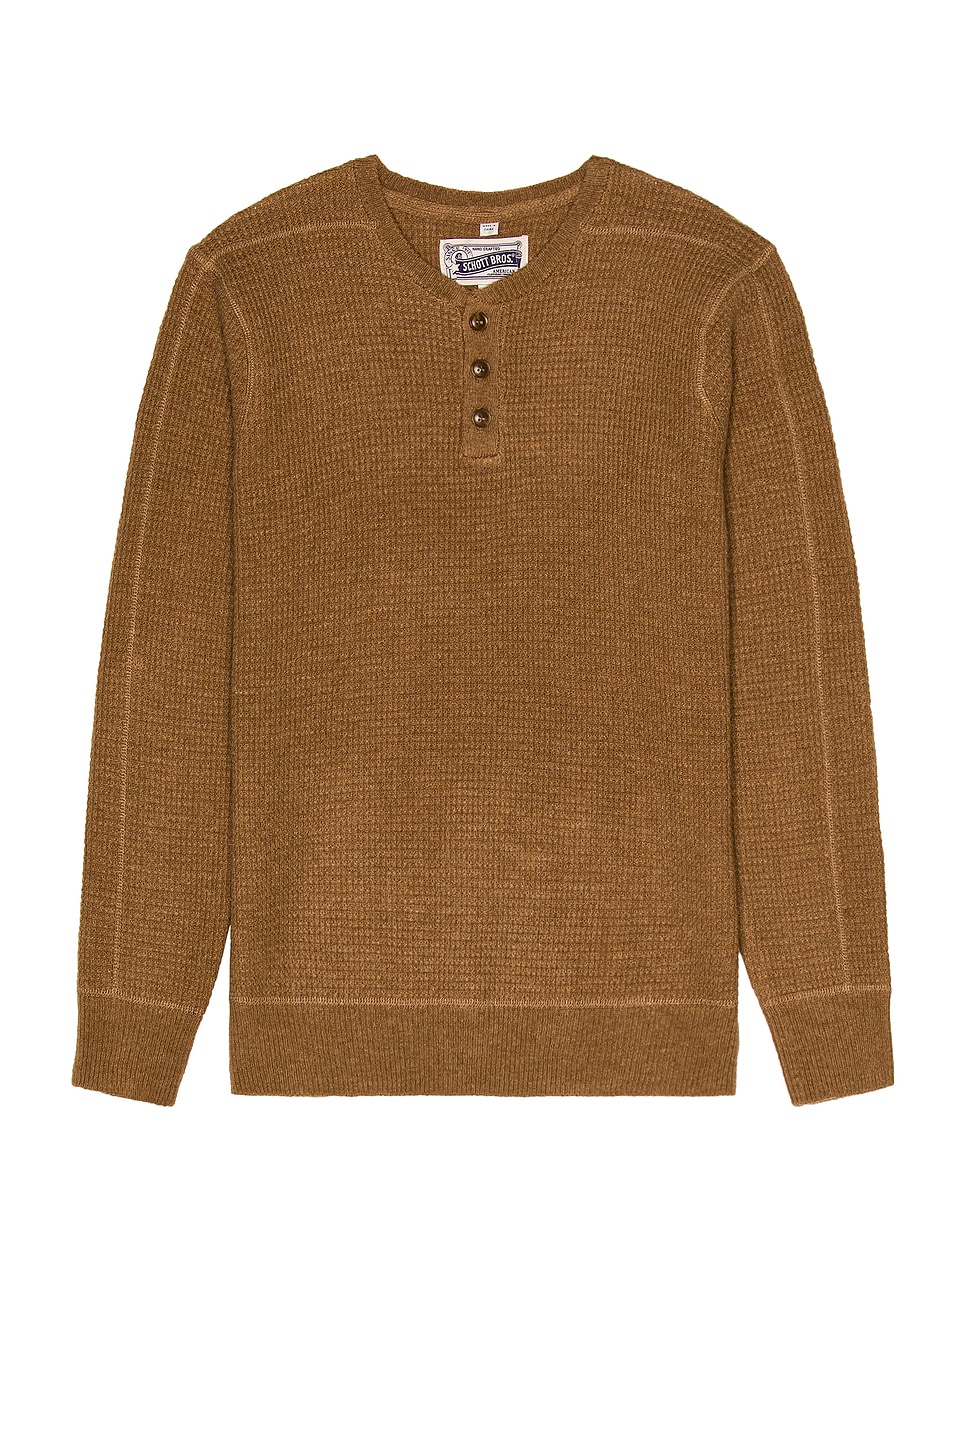 Image 1 of Schott Button Henley Sweater in Camel